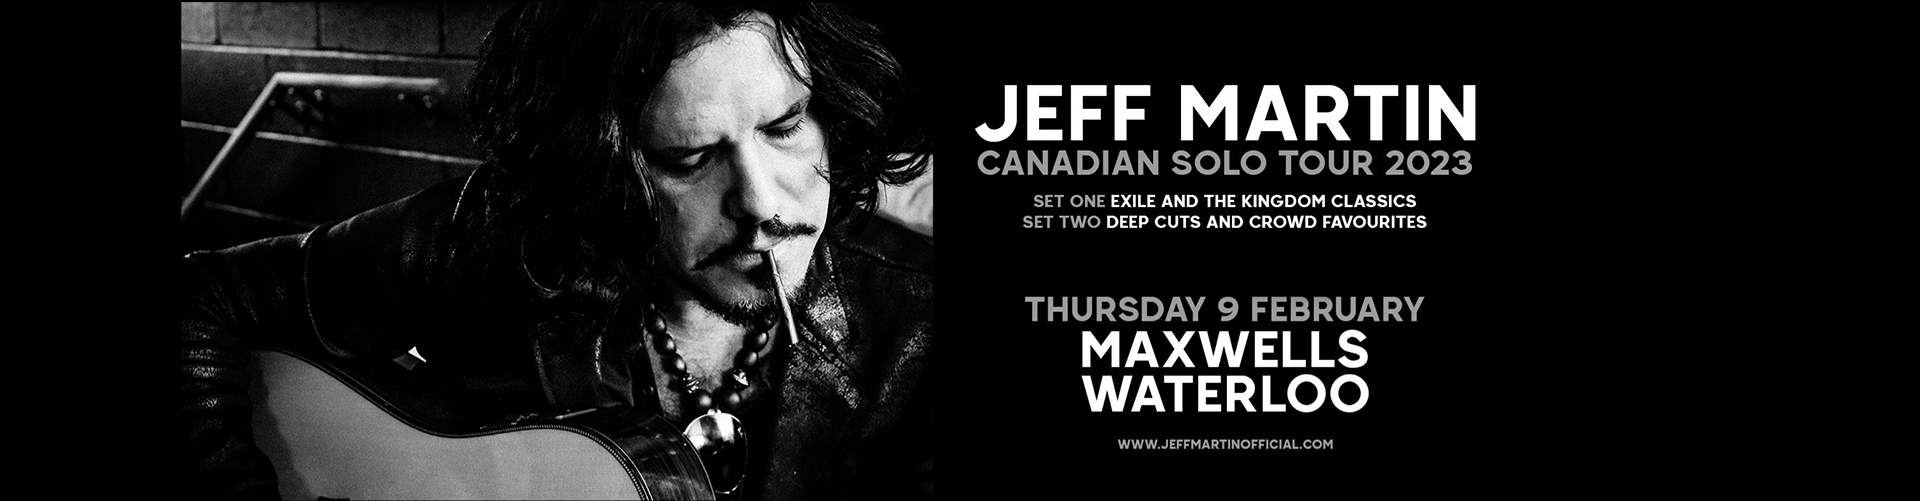 Jeff Martin Canadian Solo Tour 2023